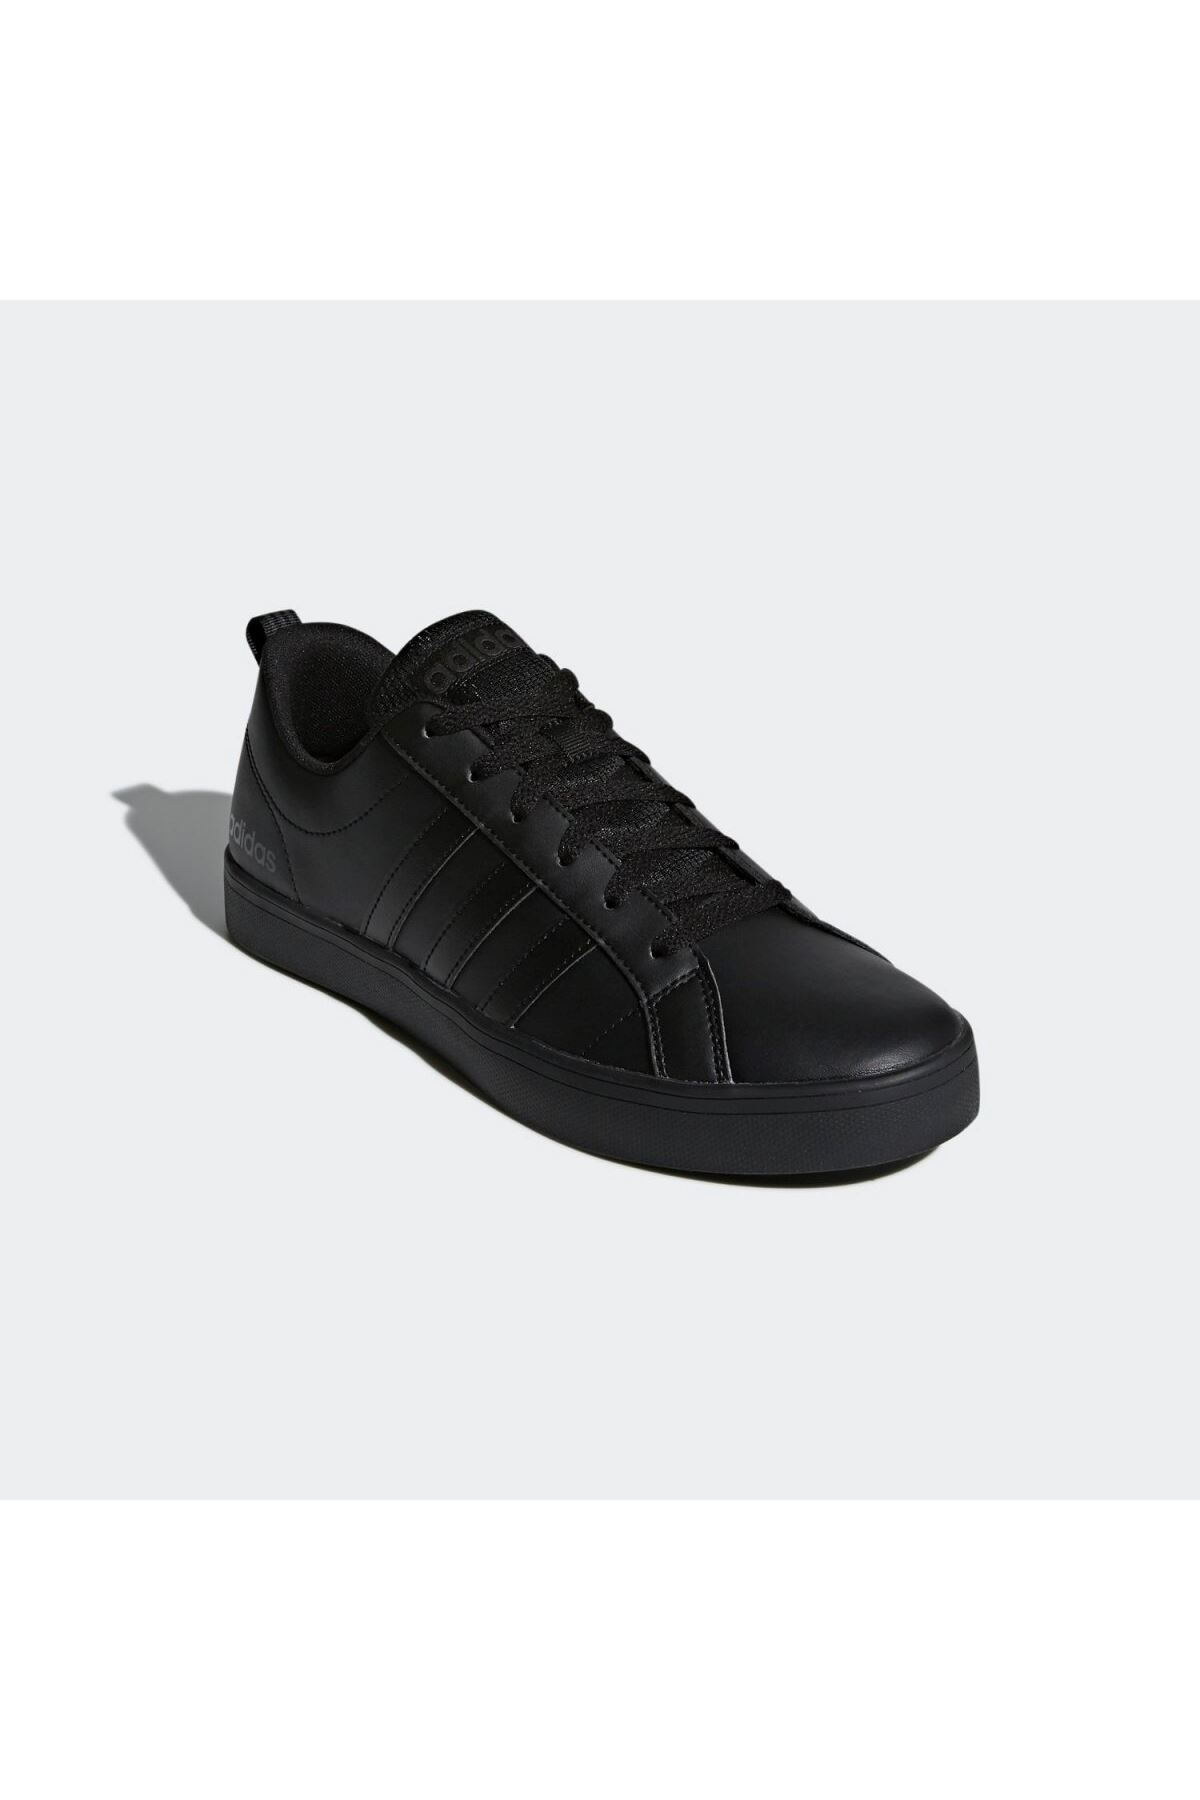 Adidas Vs Pace Erkek Siyah Spor Ayakkabı - B44869